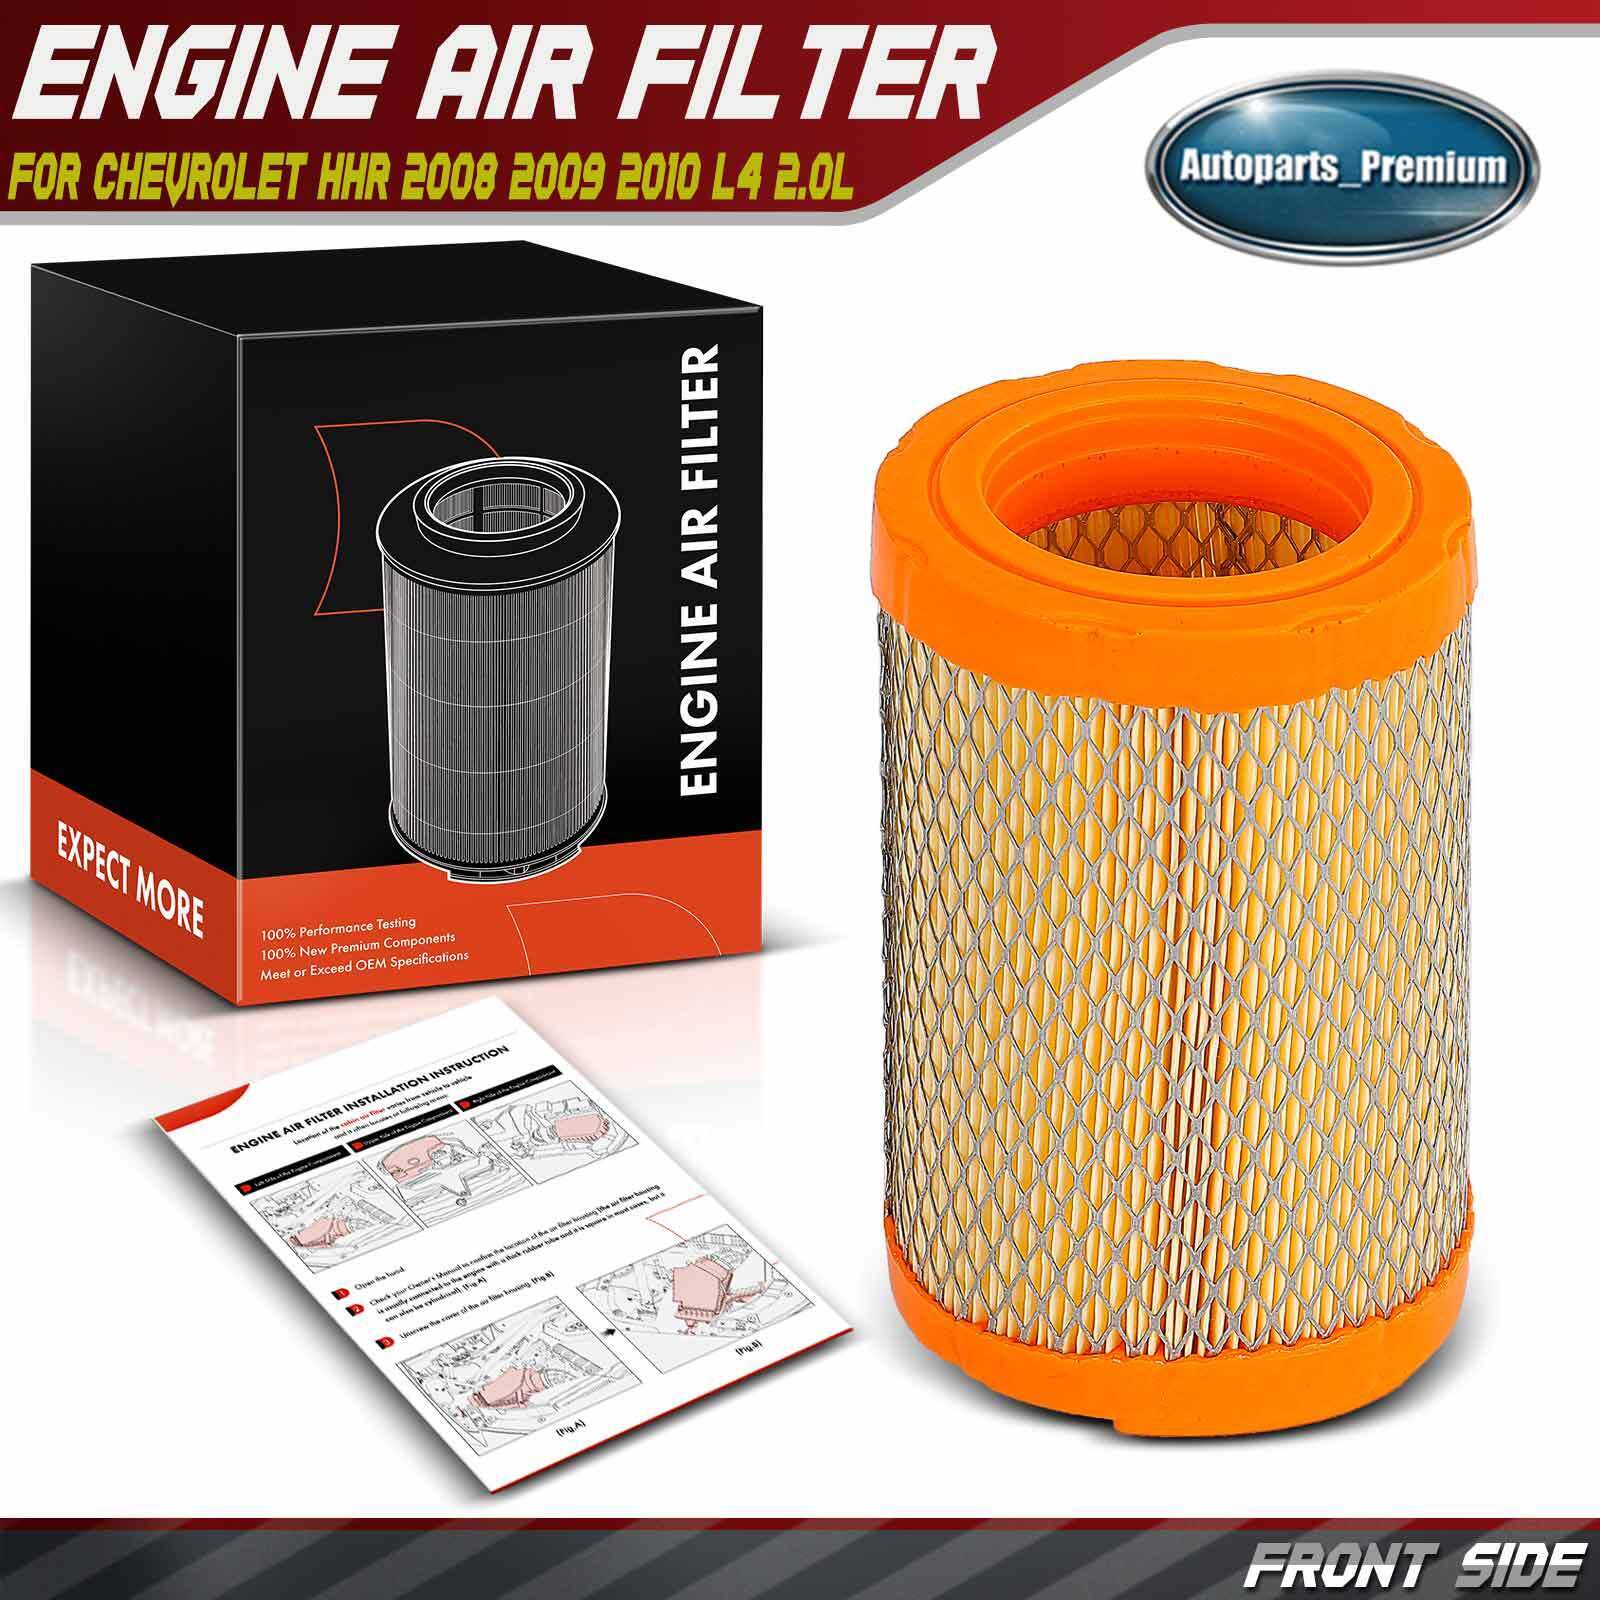 New Engine Air Filter for Chevrolet HHR 2008 2009 2010 L4 2.0L Flexible Panel